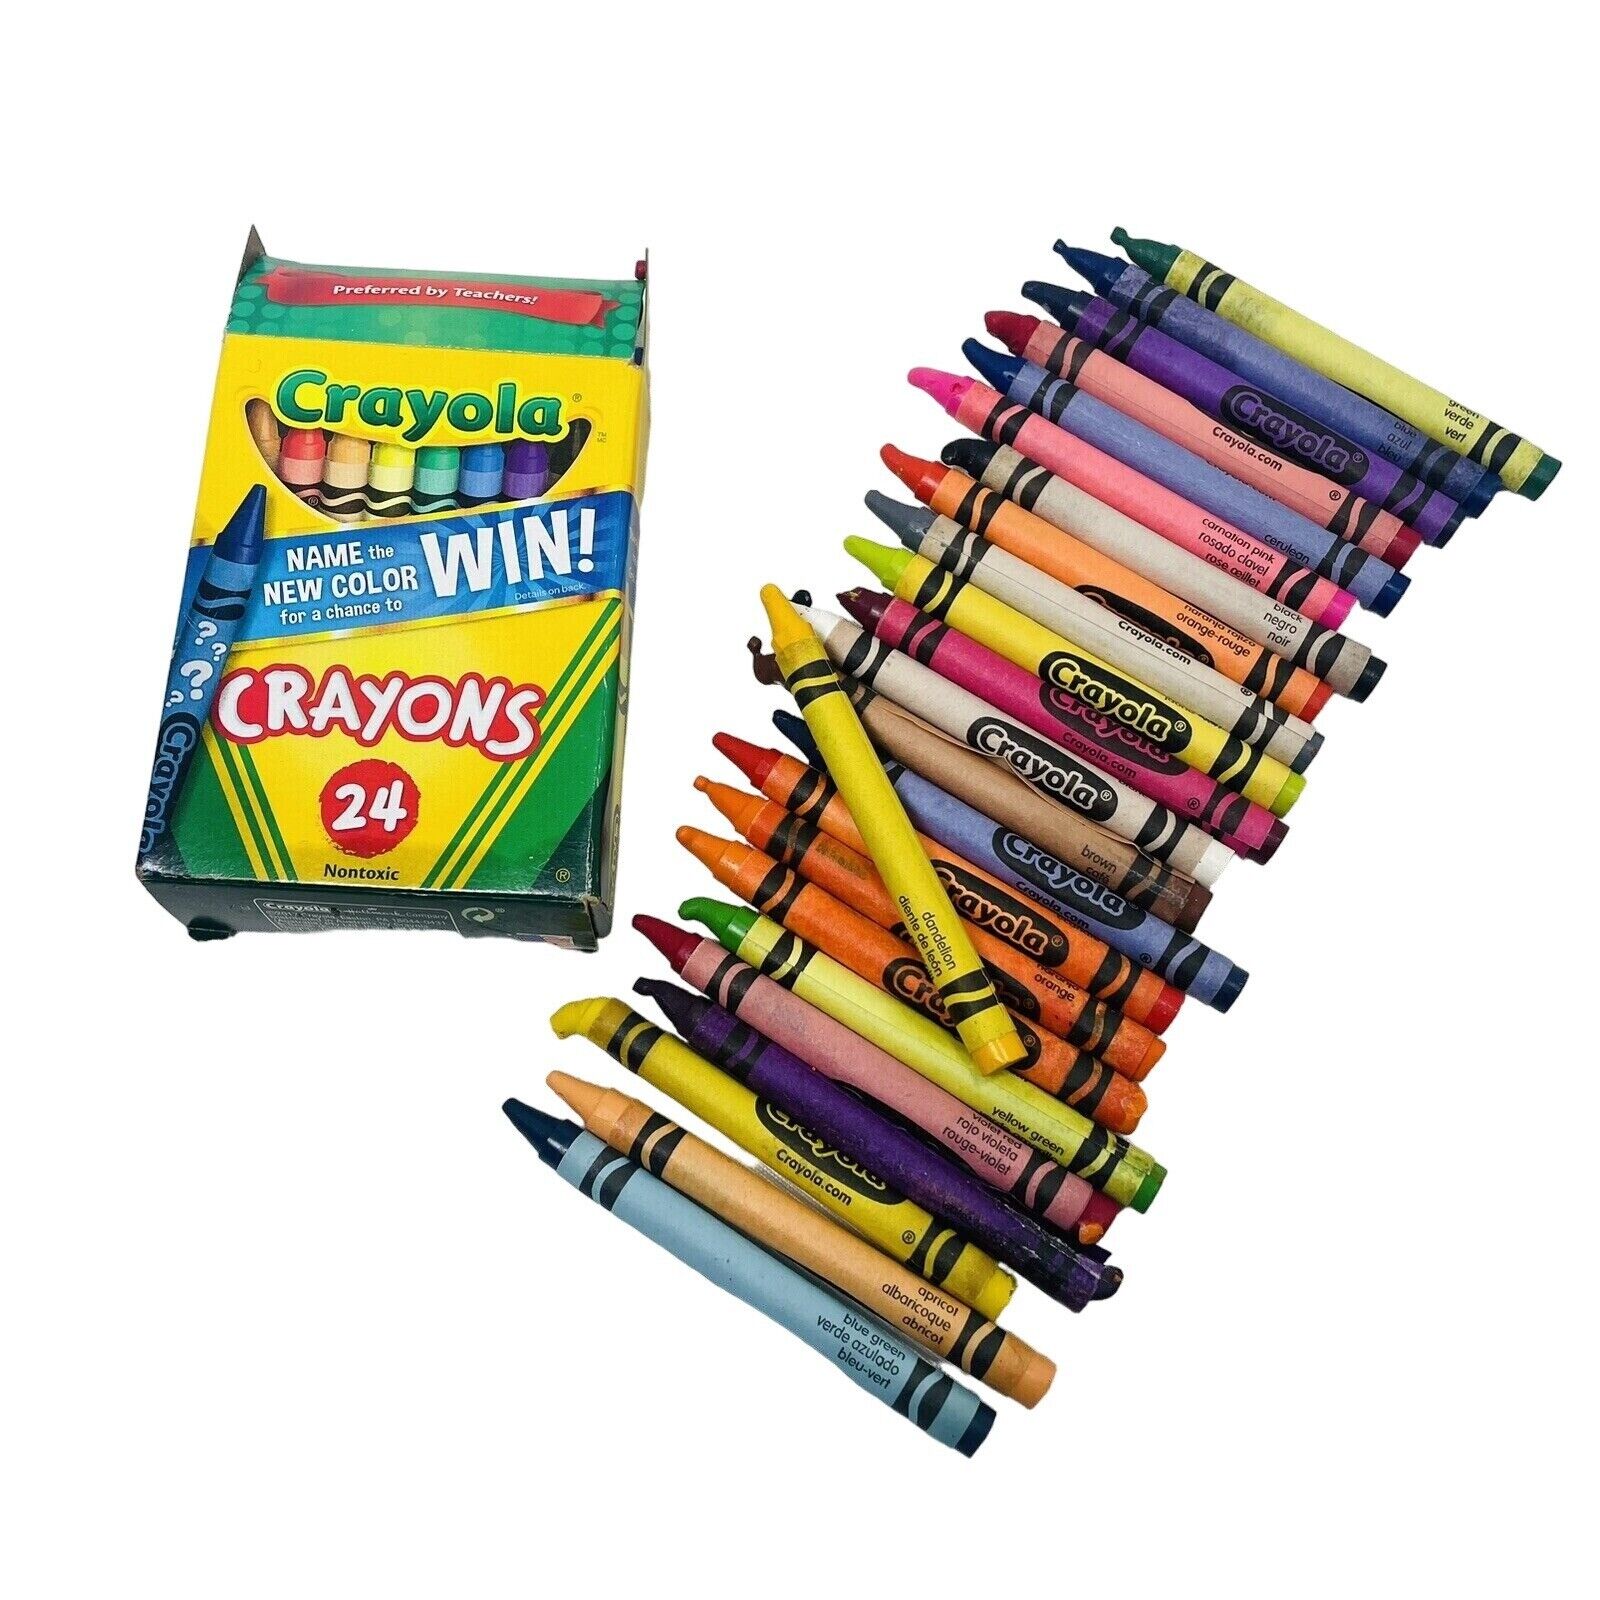 Crayola Crayon 24 Pack Last Chance Dandelion 2017 With Heat Damage